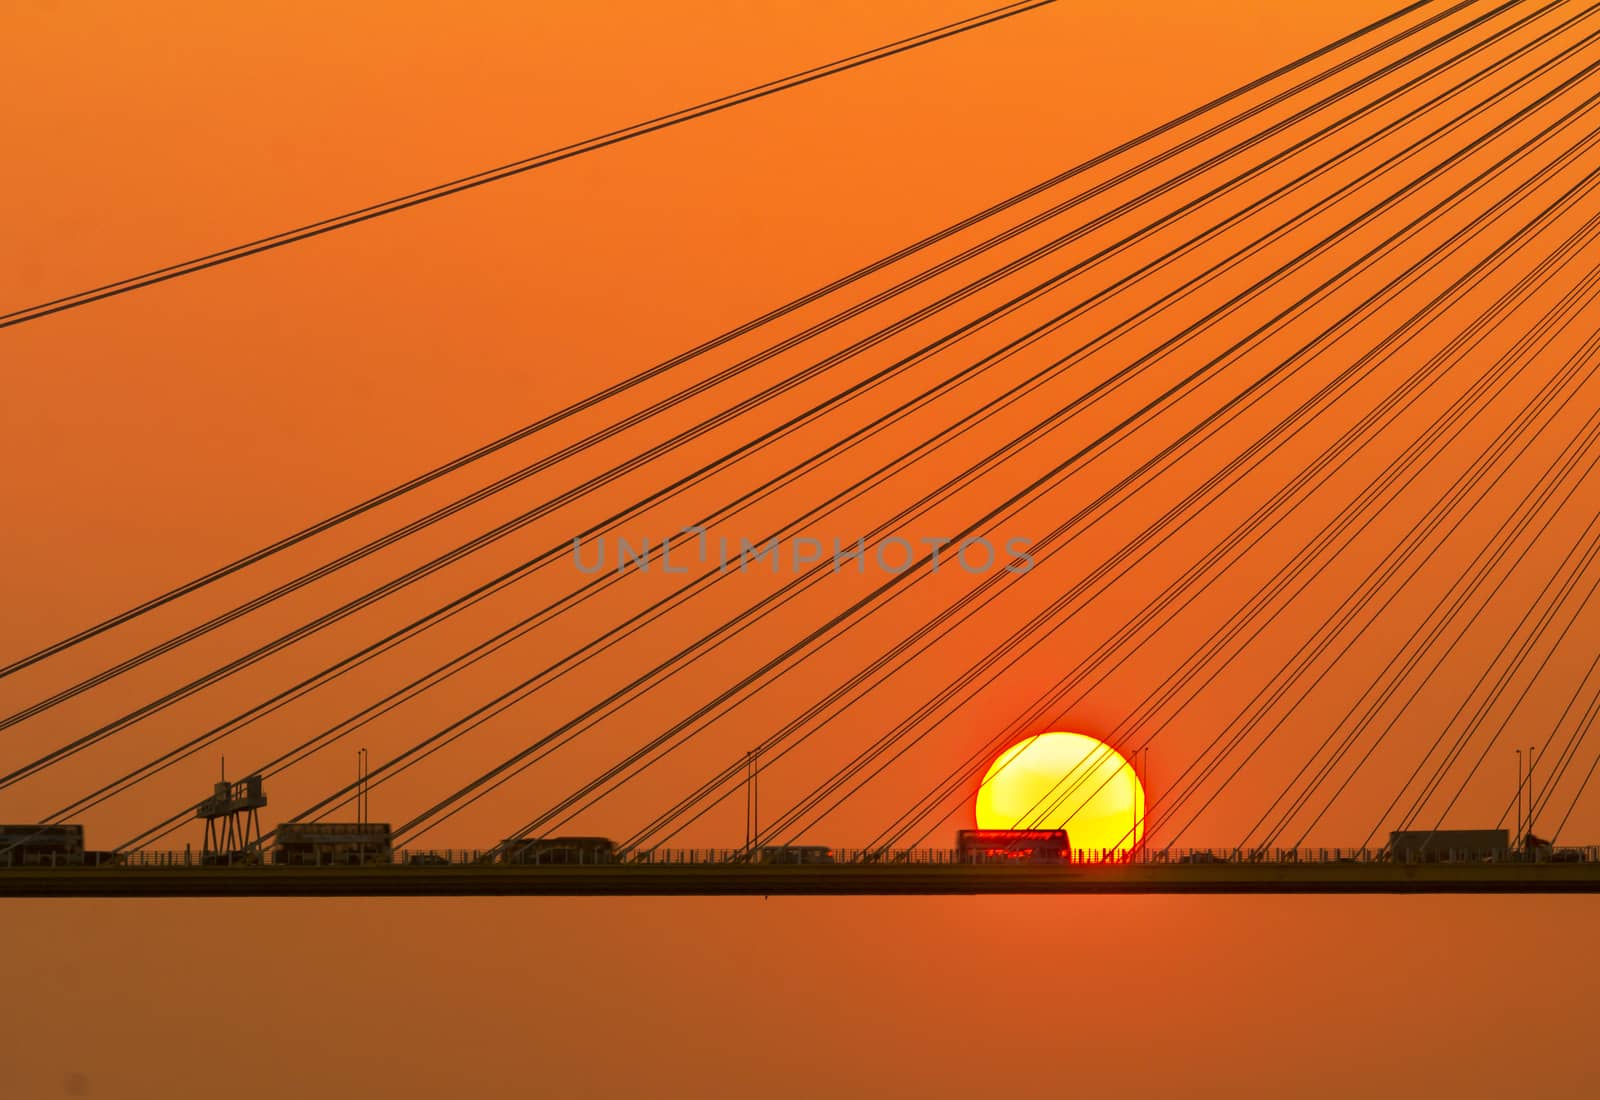 Silhouette of a bridge under setting sun